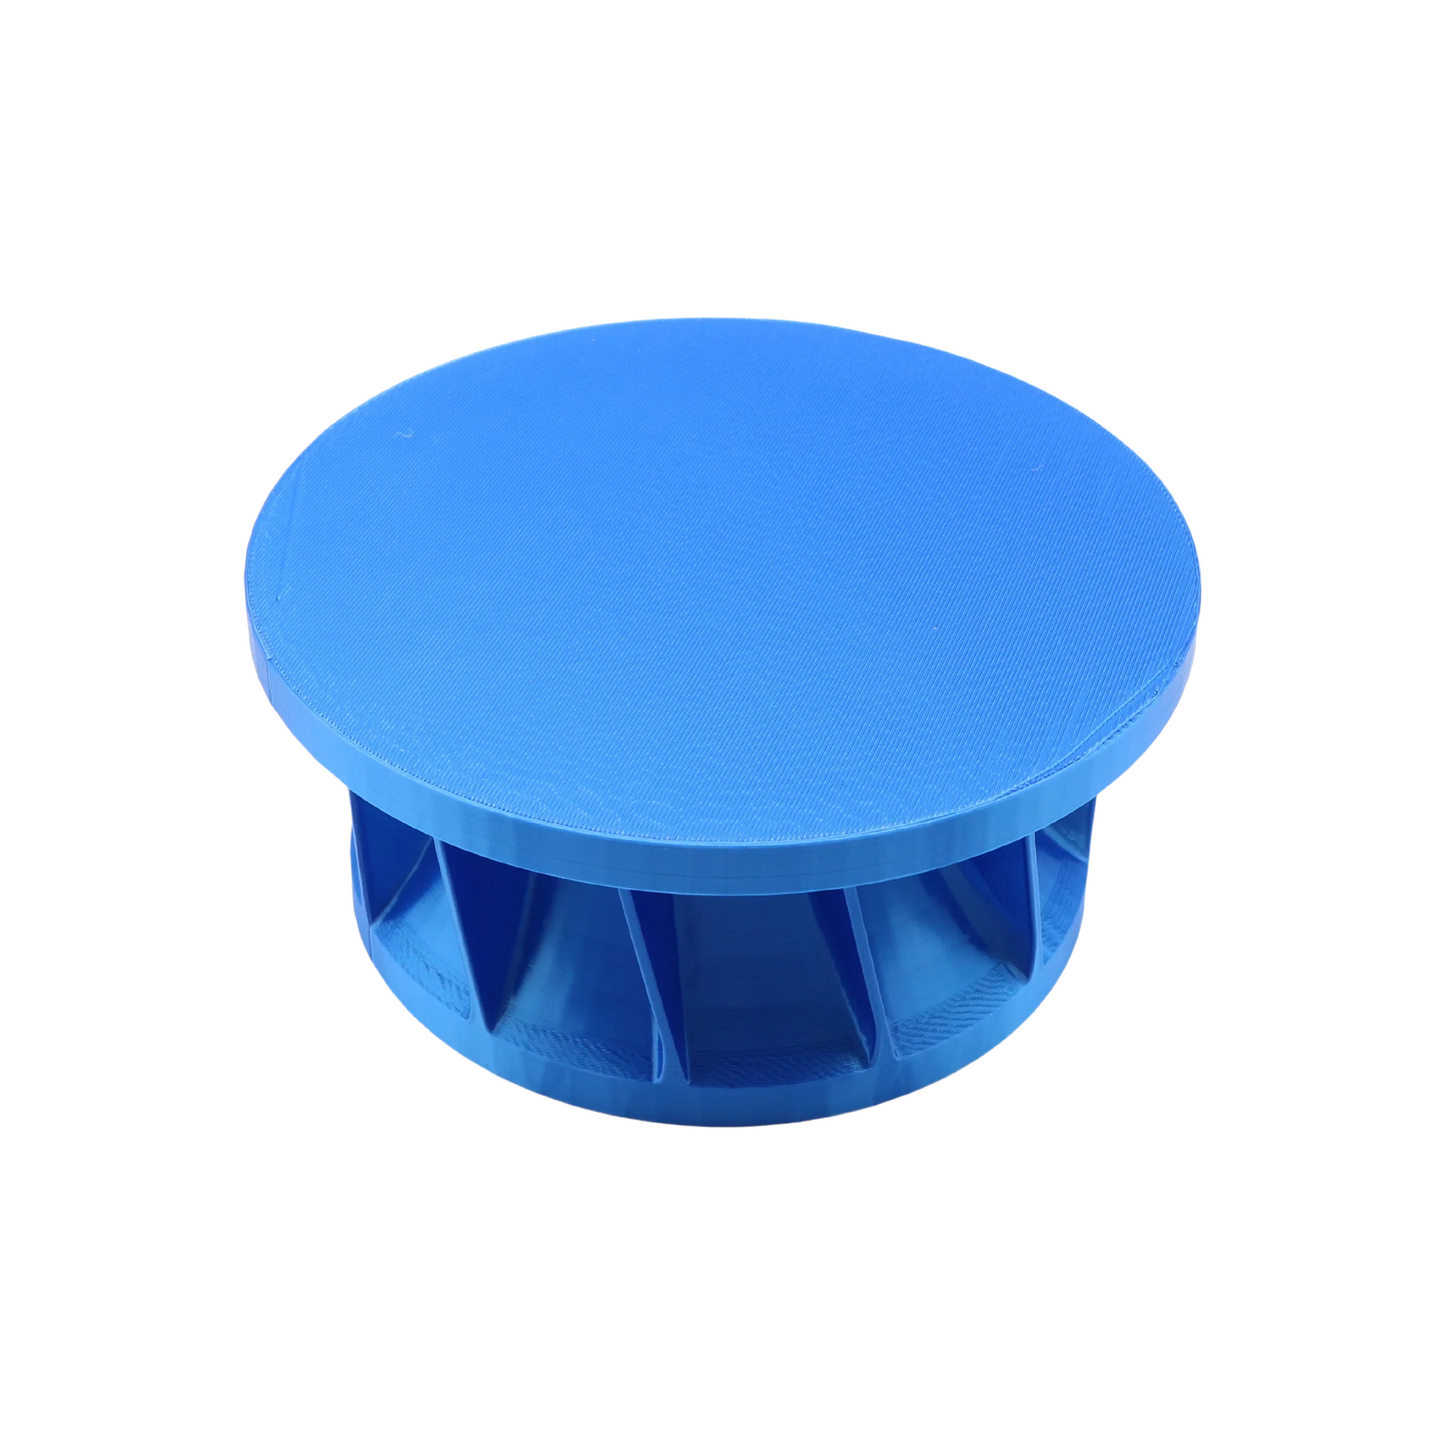 Mantua cake tray stand shiny blue edition